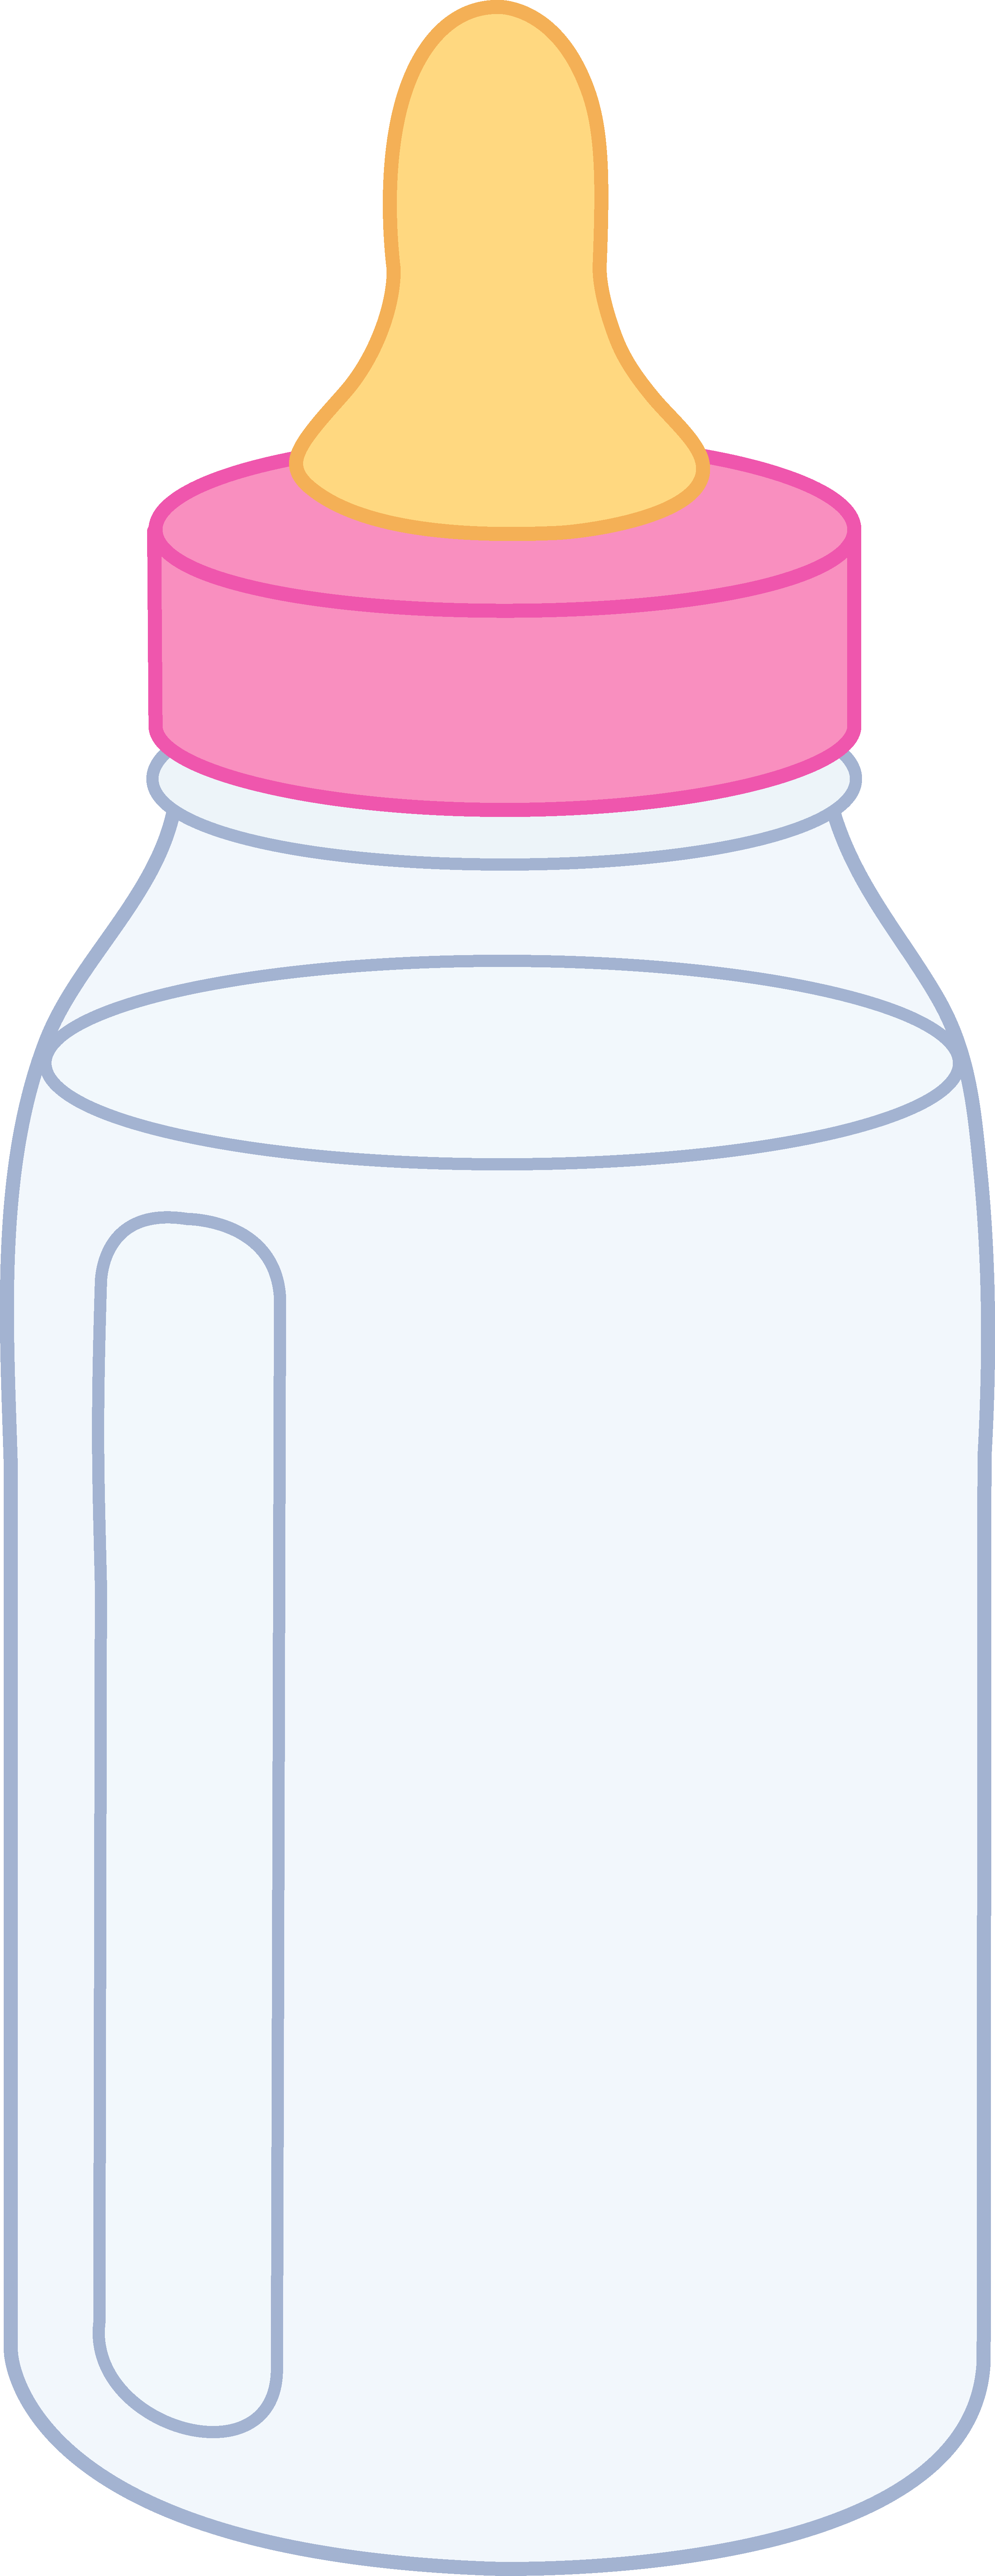 Cartoon Baby Bottle 